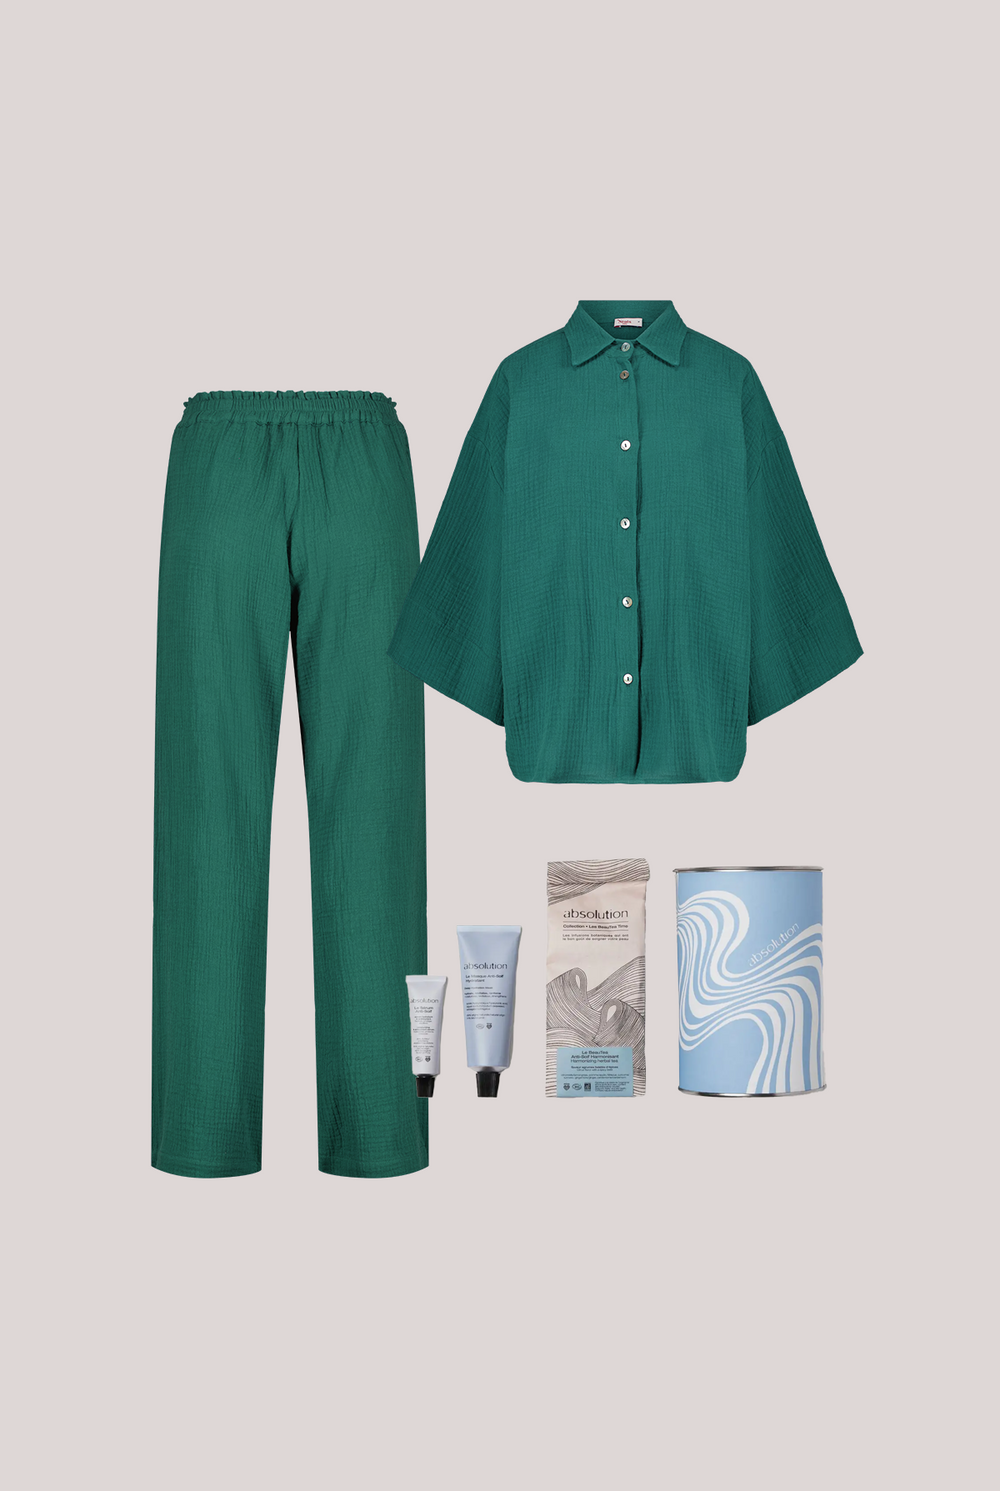 Coffret Cocooning - Pyjama Mimosa Vert Sapin + Kit Absolution